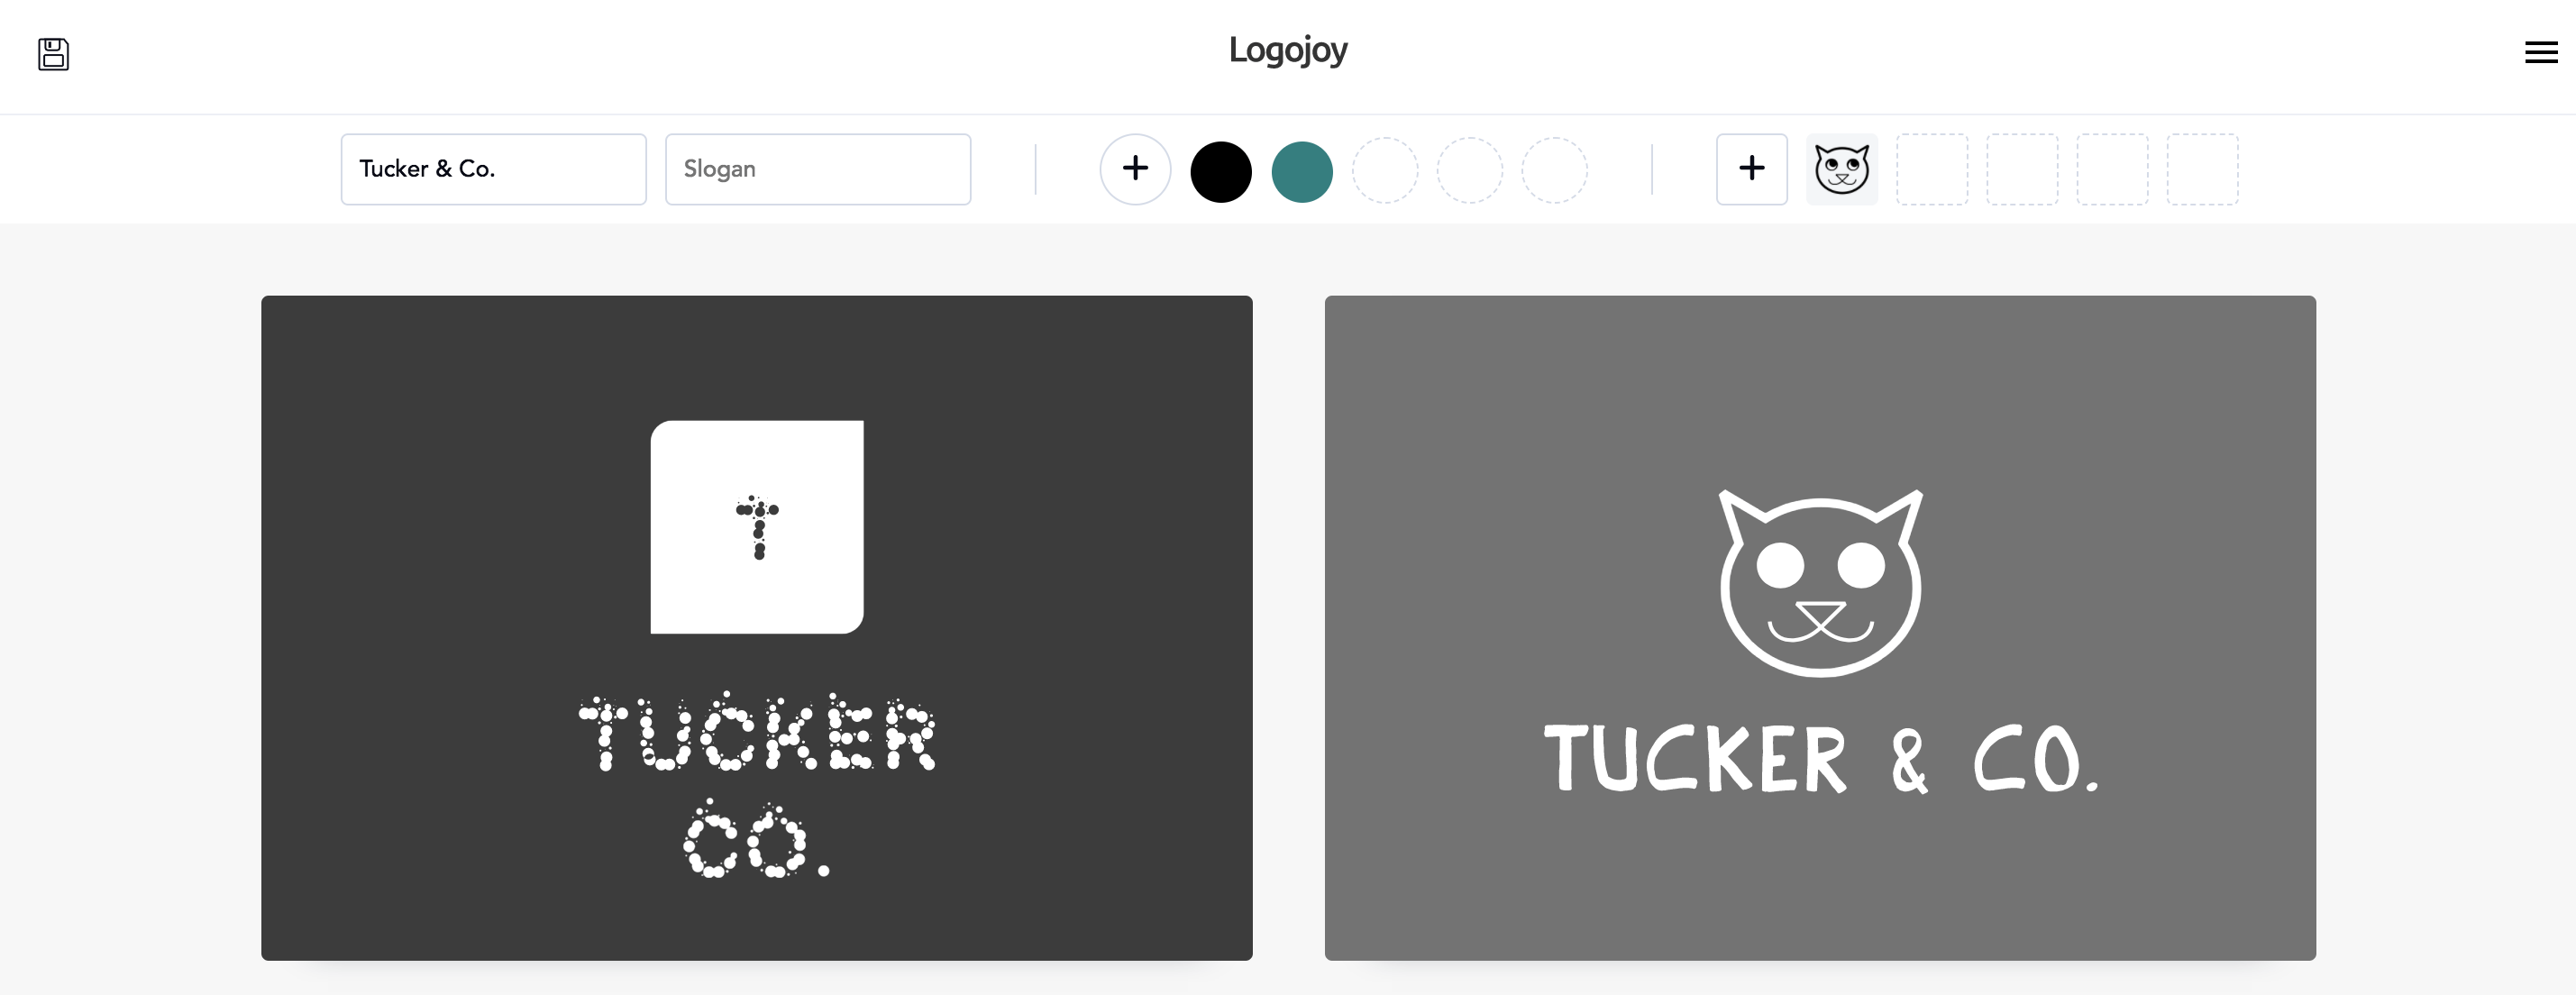 Black If Logo - Online Logo Makers & Generators to Design Your Brand